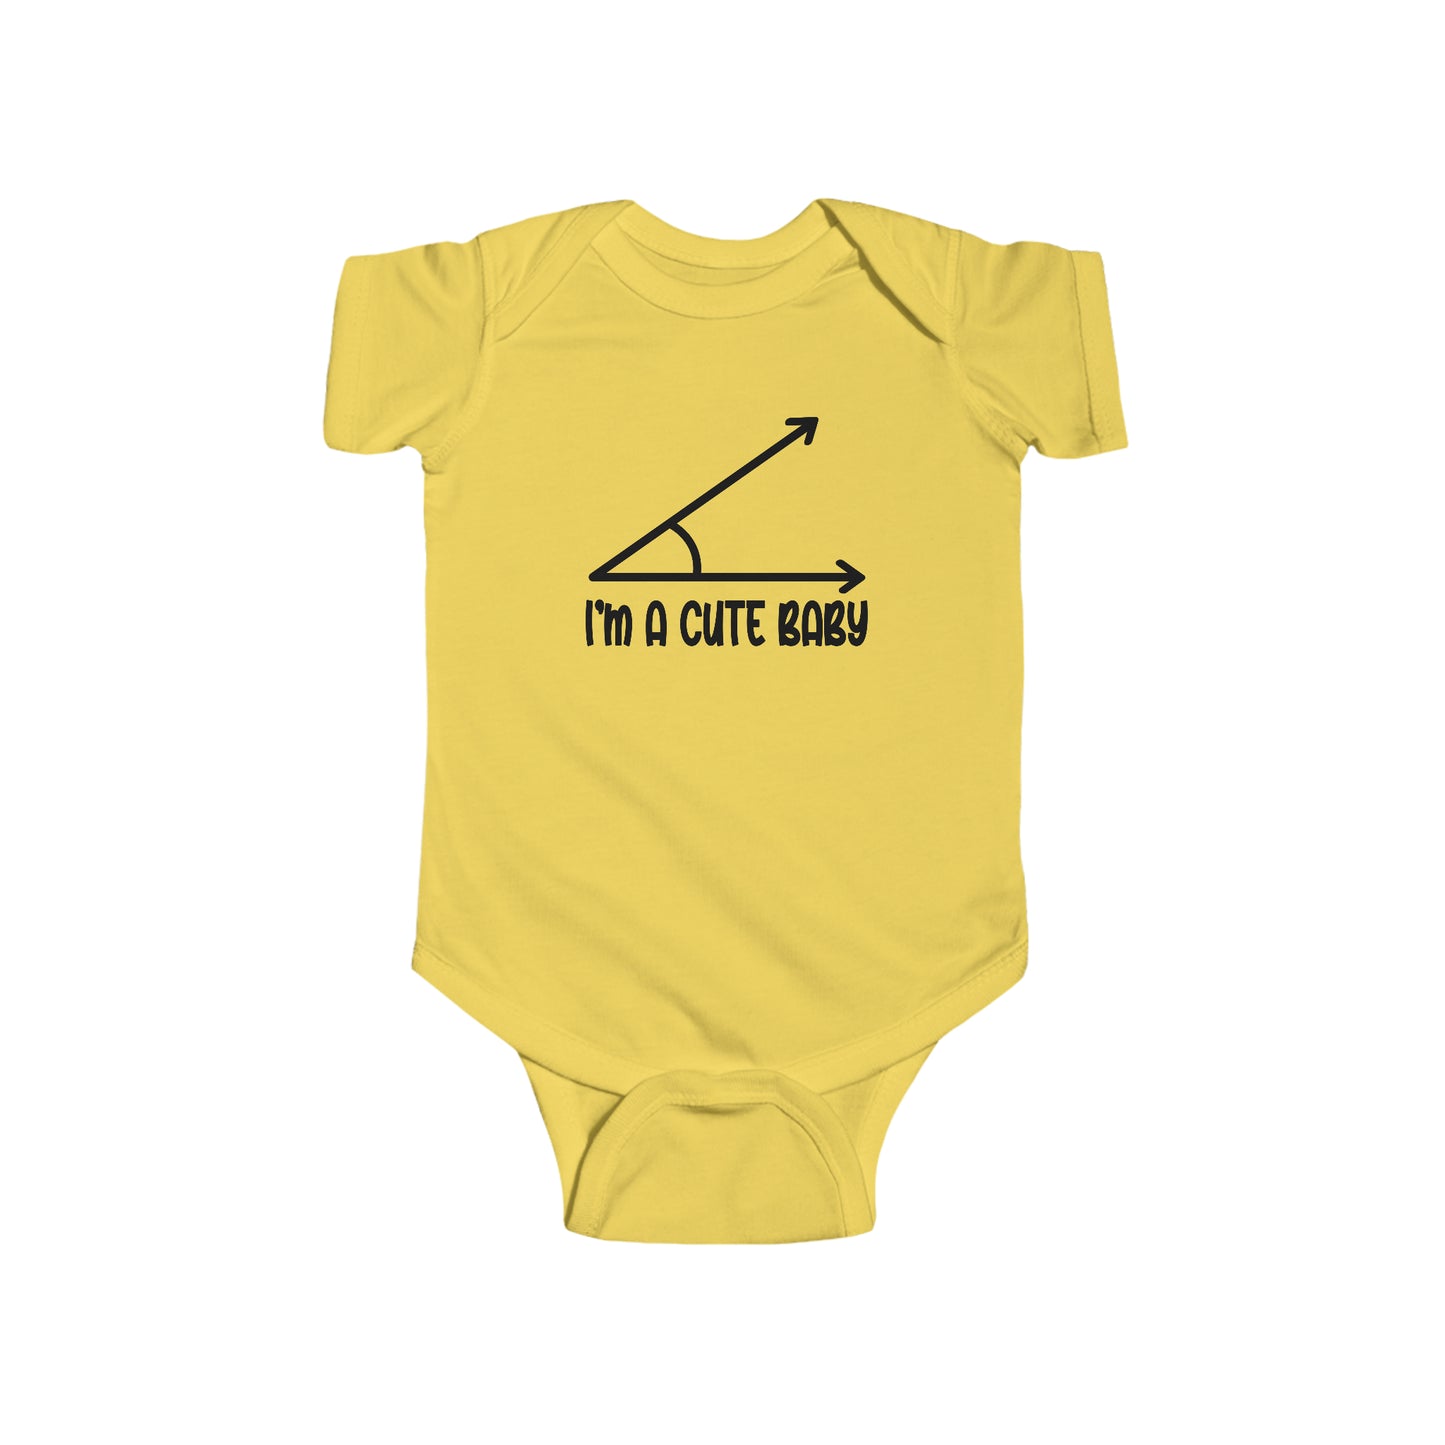 Acute - Infant Fine Jersey Bodysuit